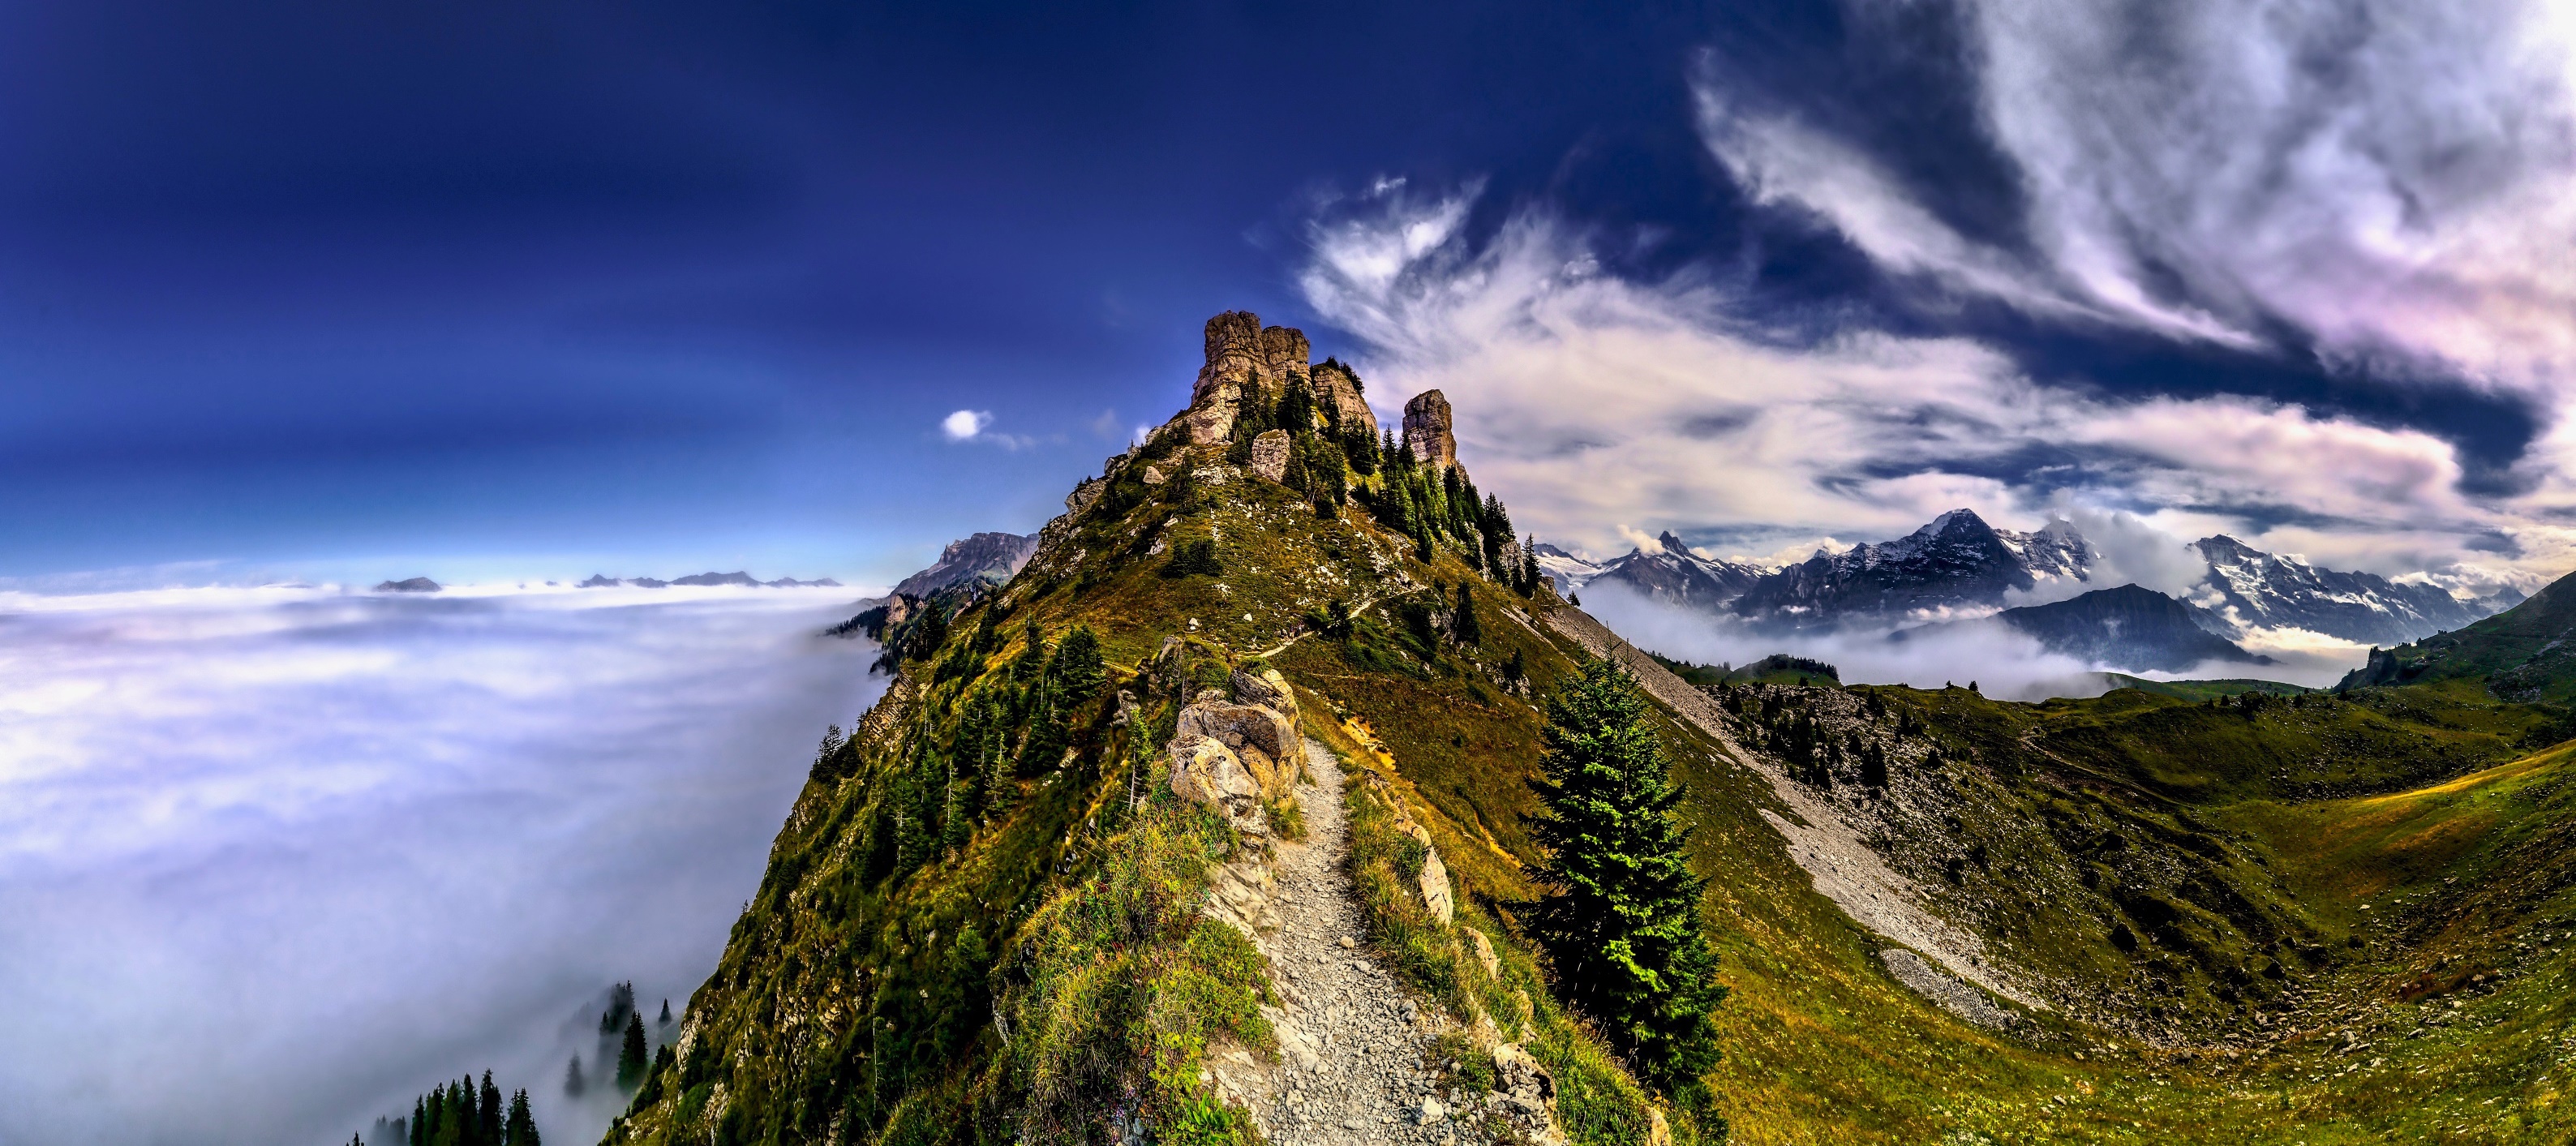 General 3176x1413 nature panorama landscape mountains Switzerland